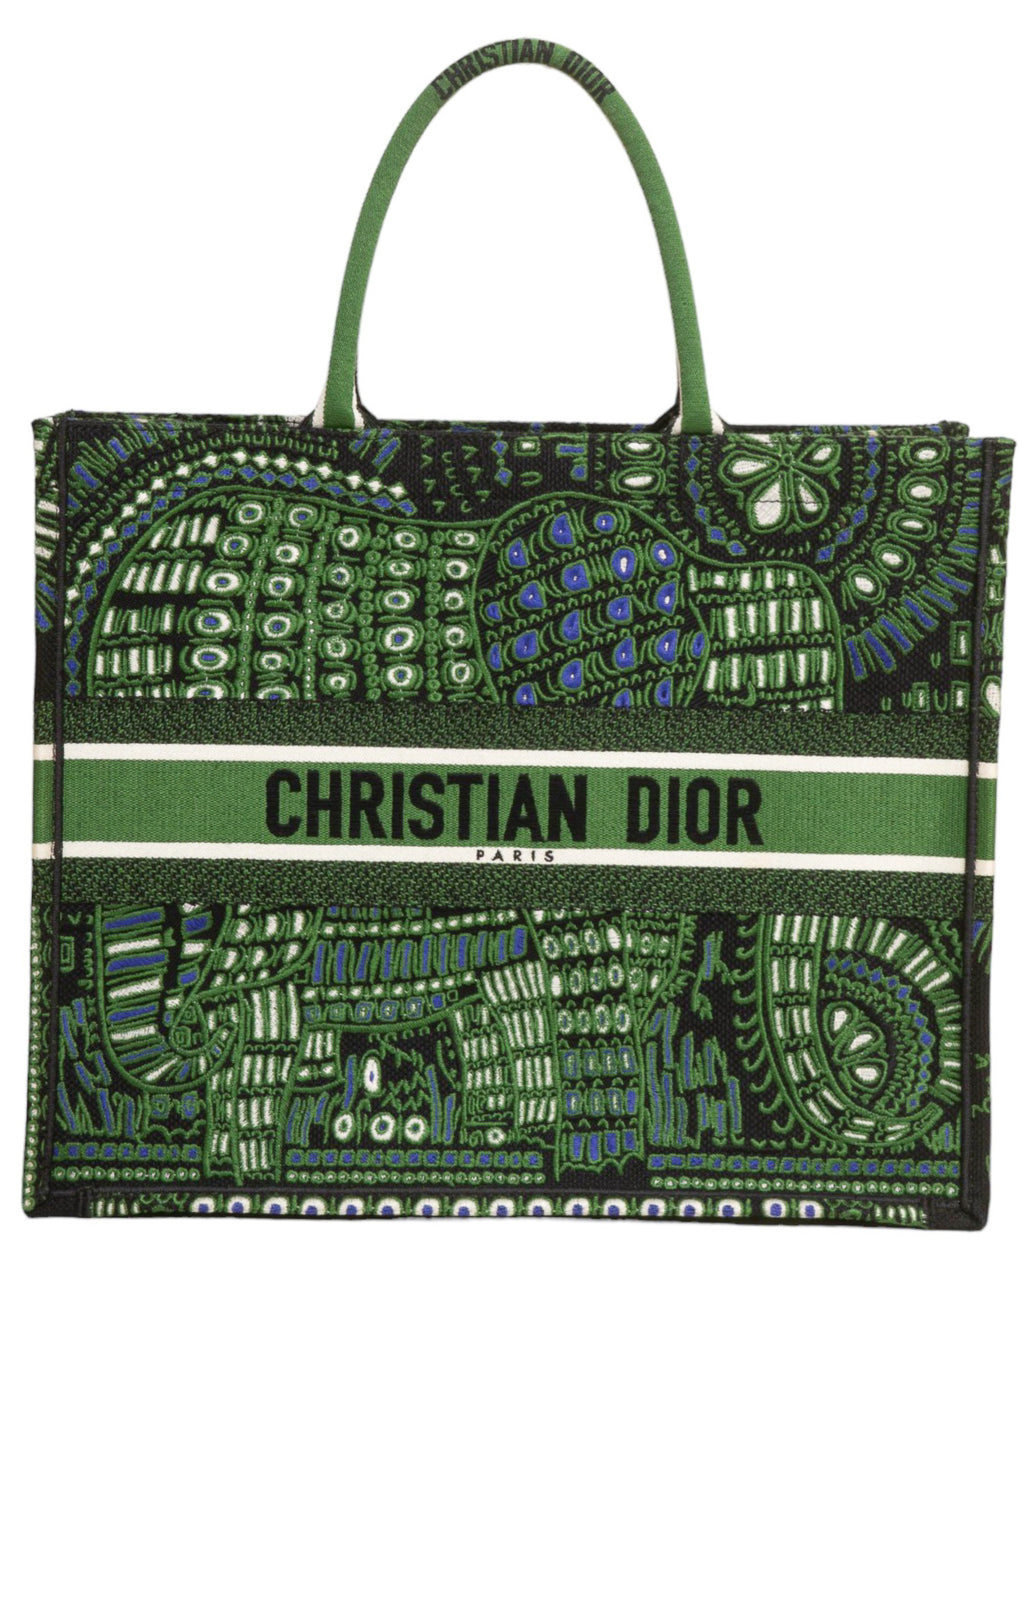 CHRISTIAN DIOR (RARE) Bag Size: 16.375" x 7.125" x 13.625"; 6.375" drop handle